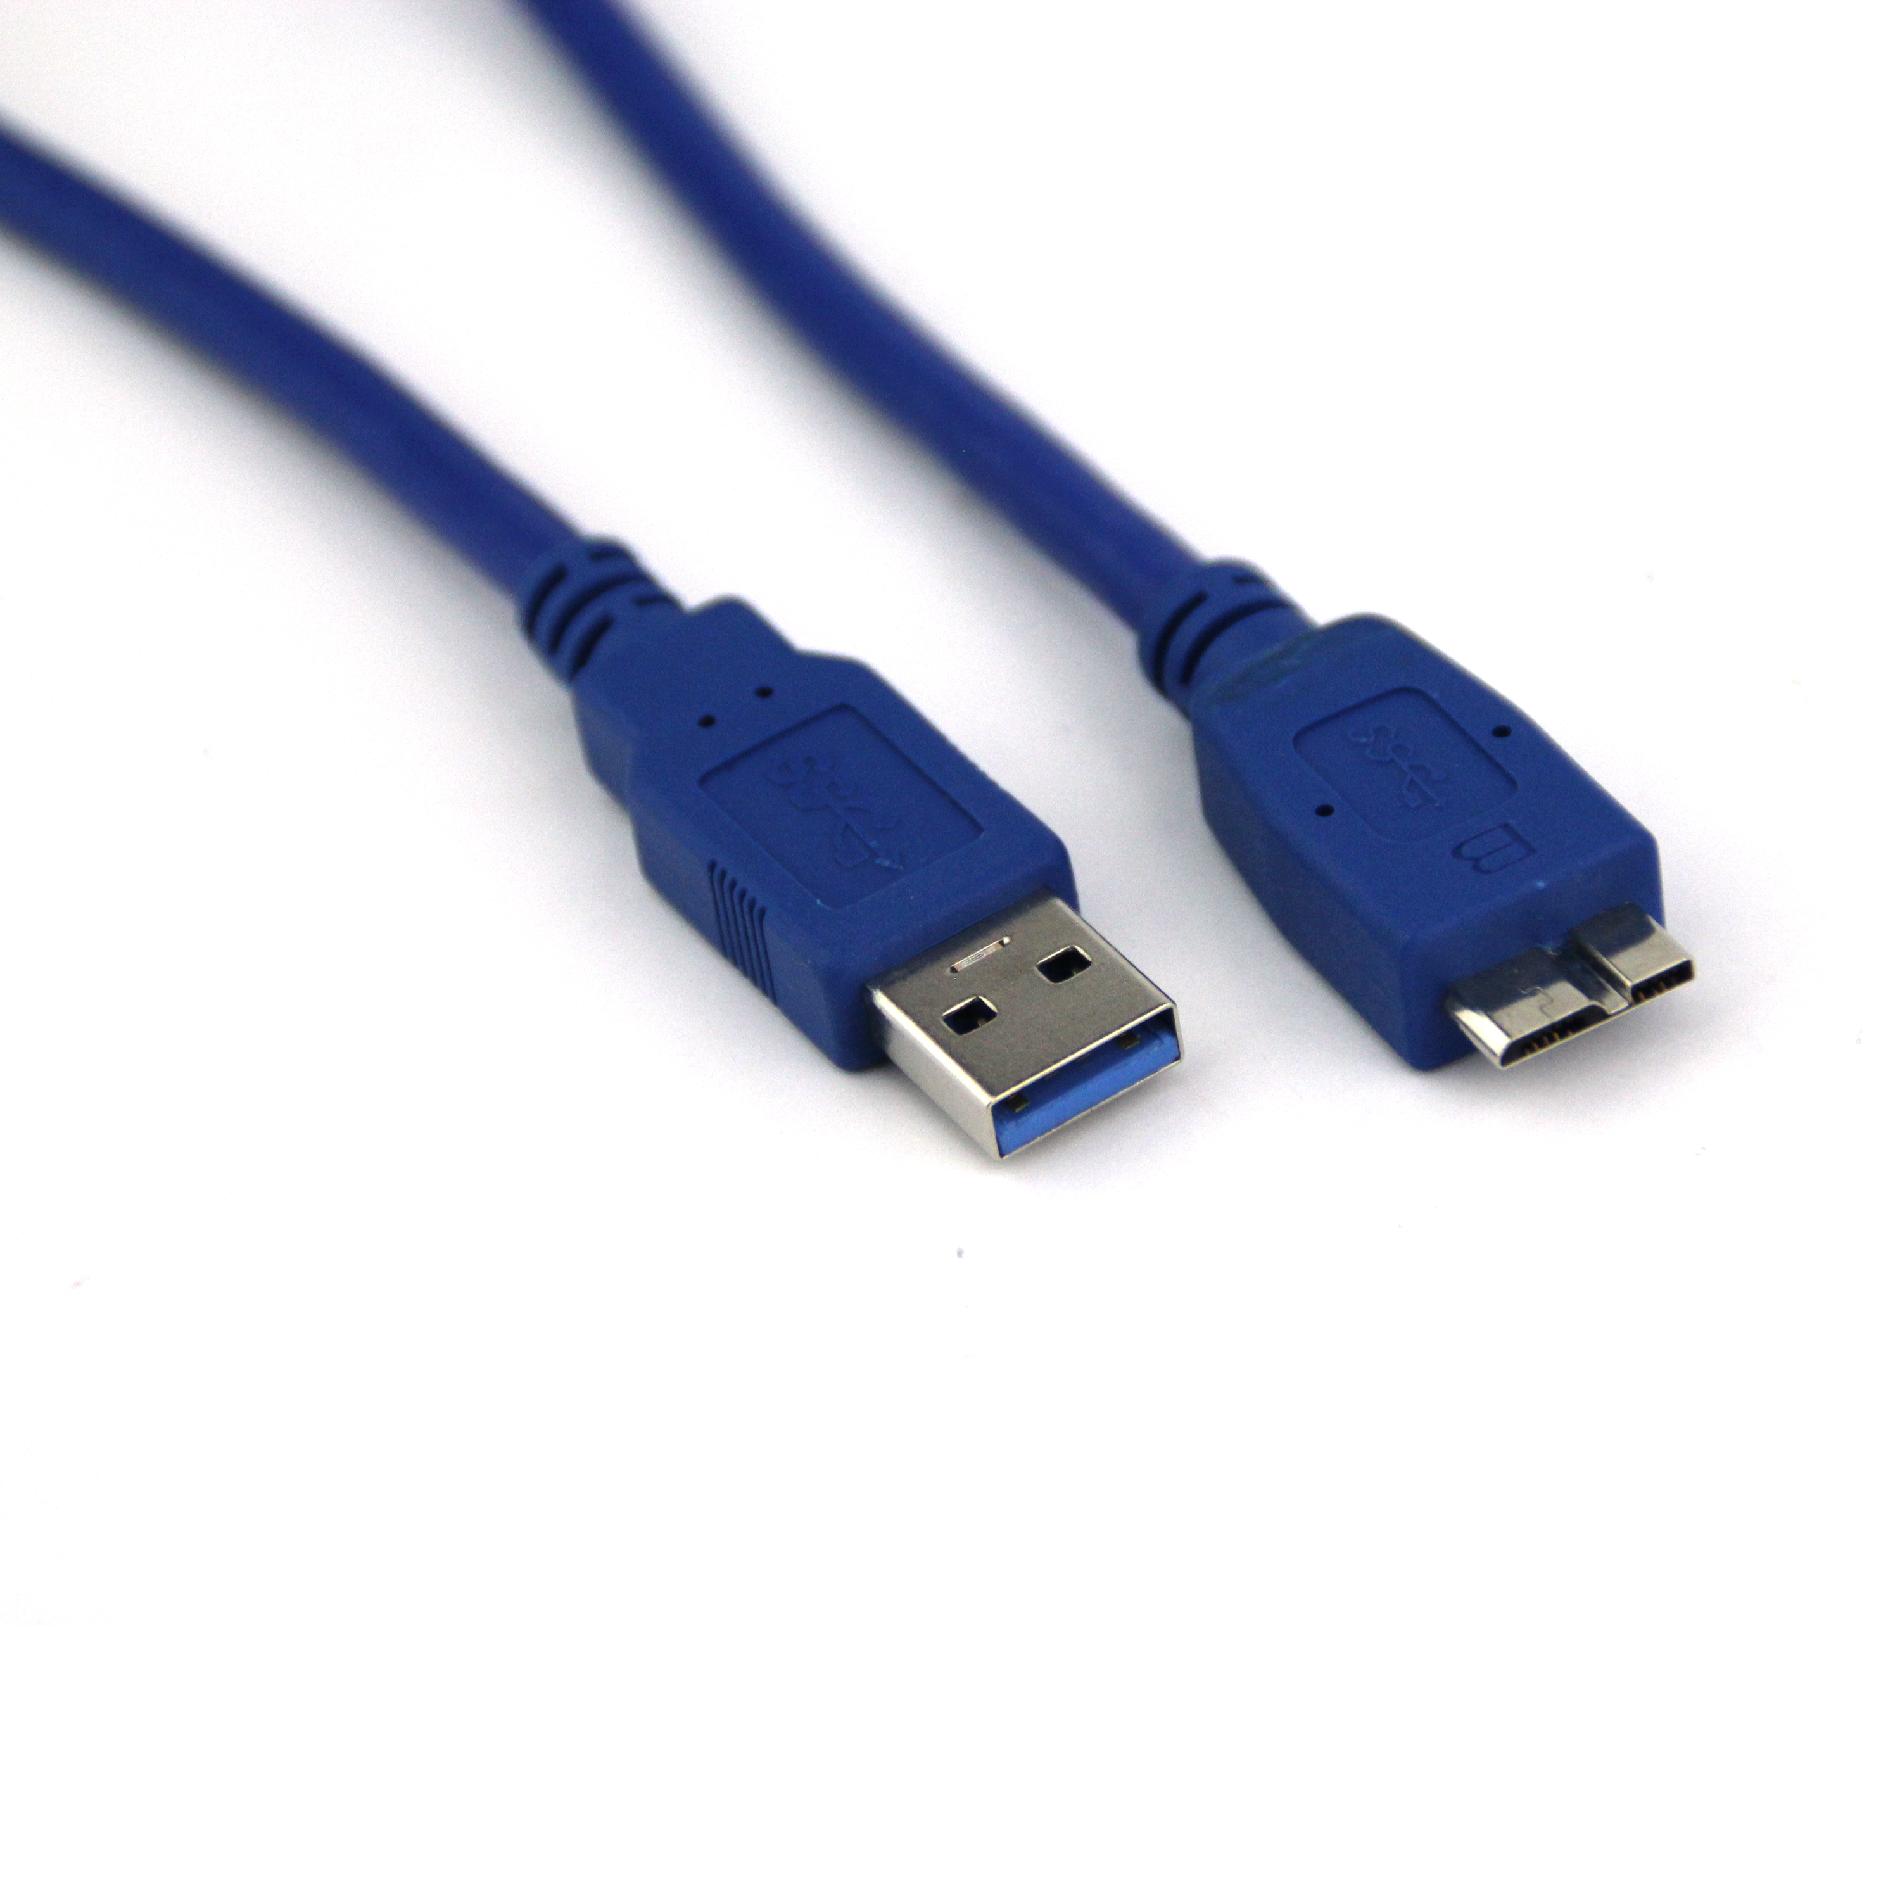 Vcom  VC-SB3MC10 USB 3.0 Type A Male to Micro B Male Cable  10feet